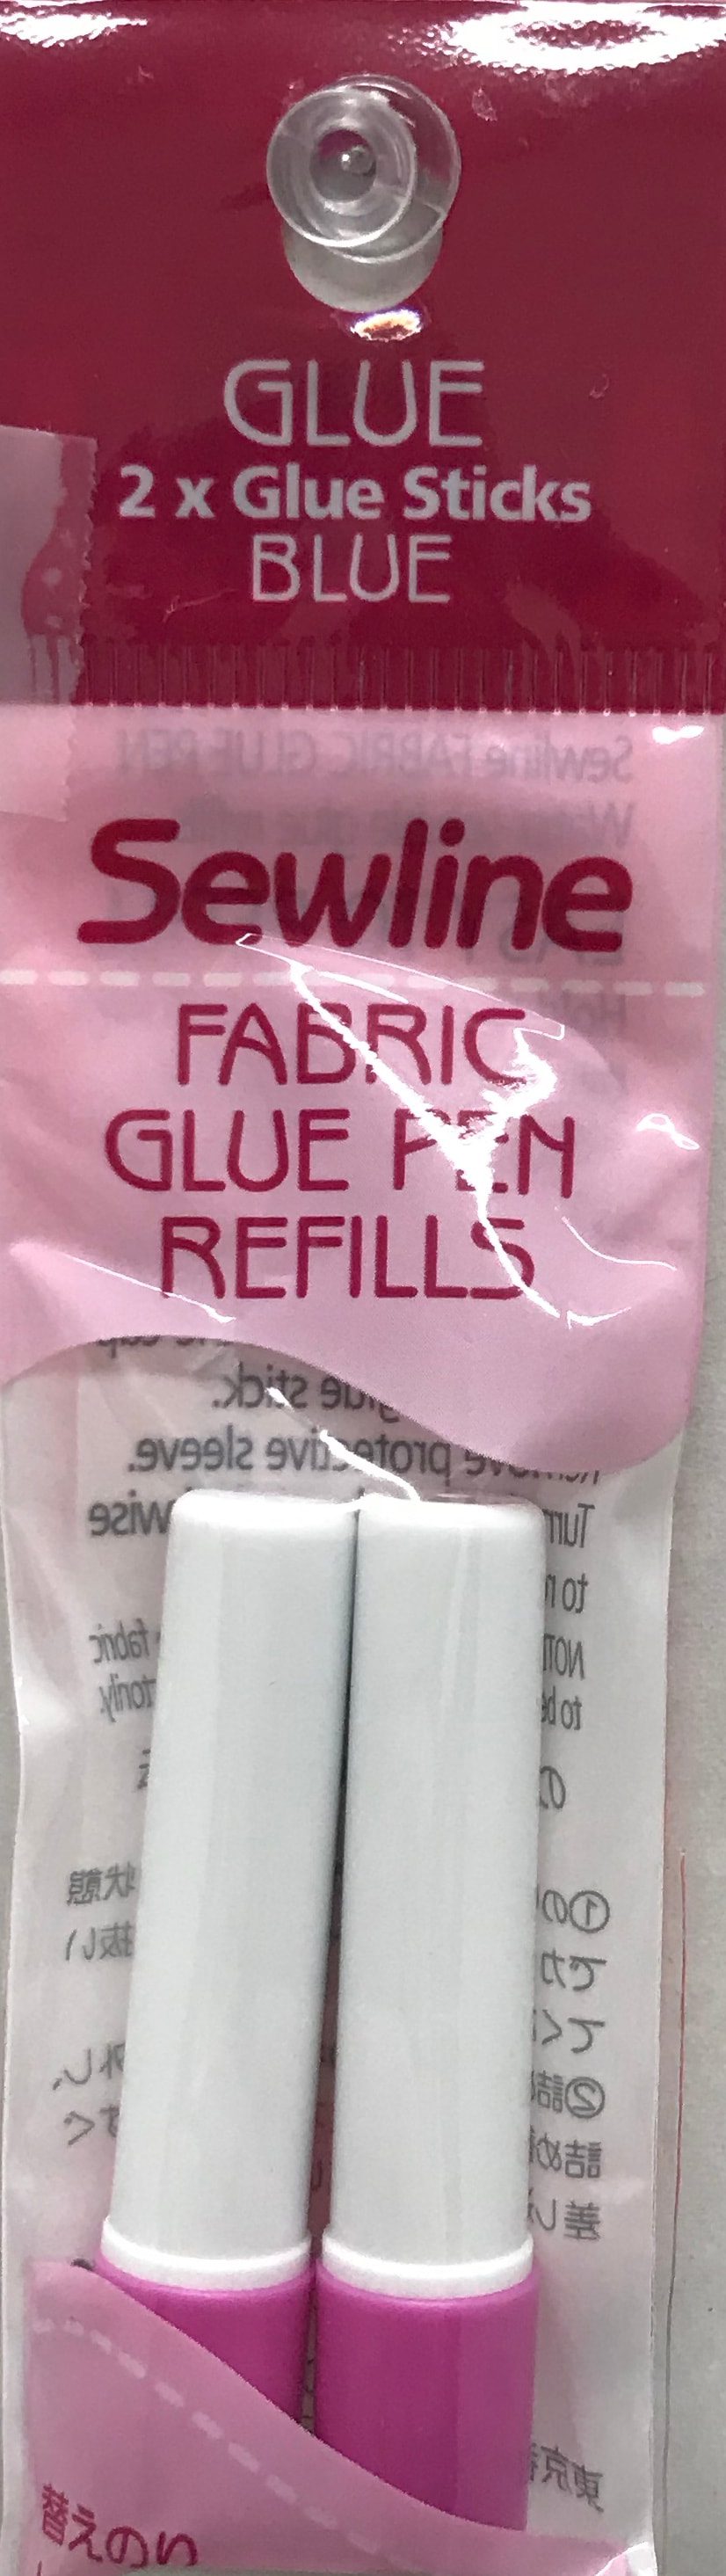 Sewline Water Soluble Glue Pen Refills